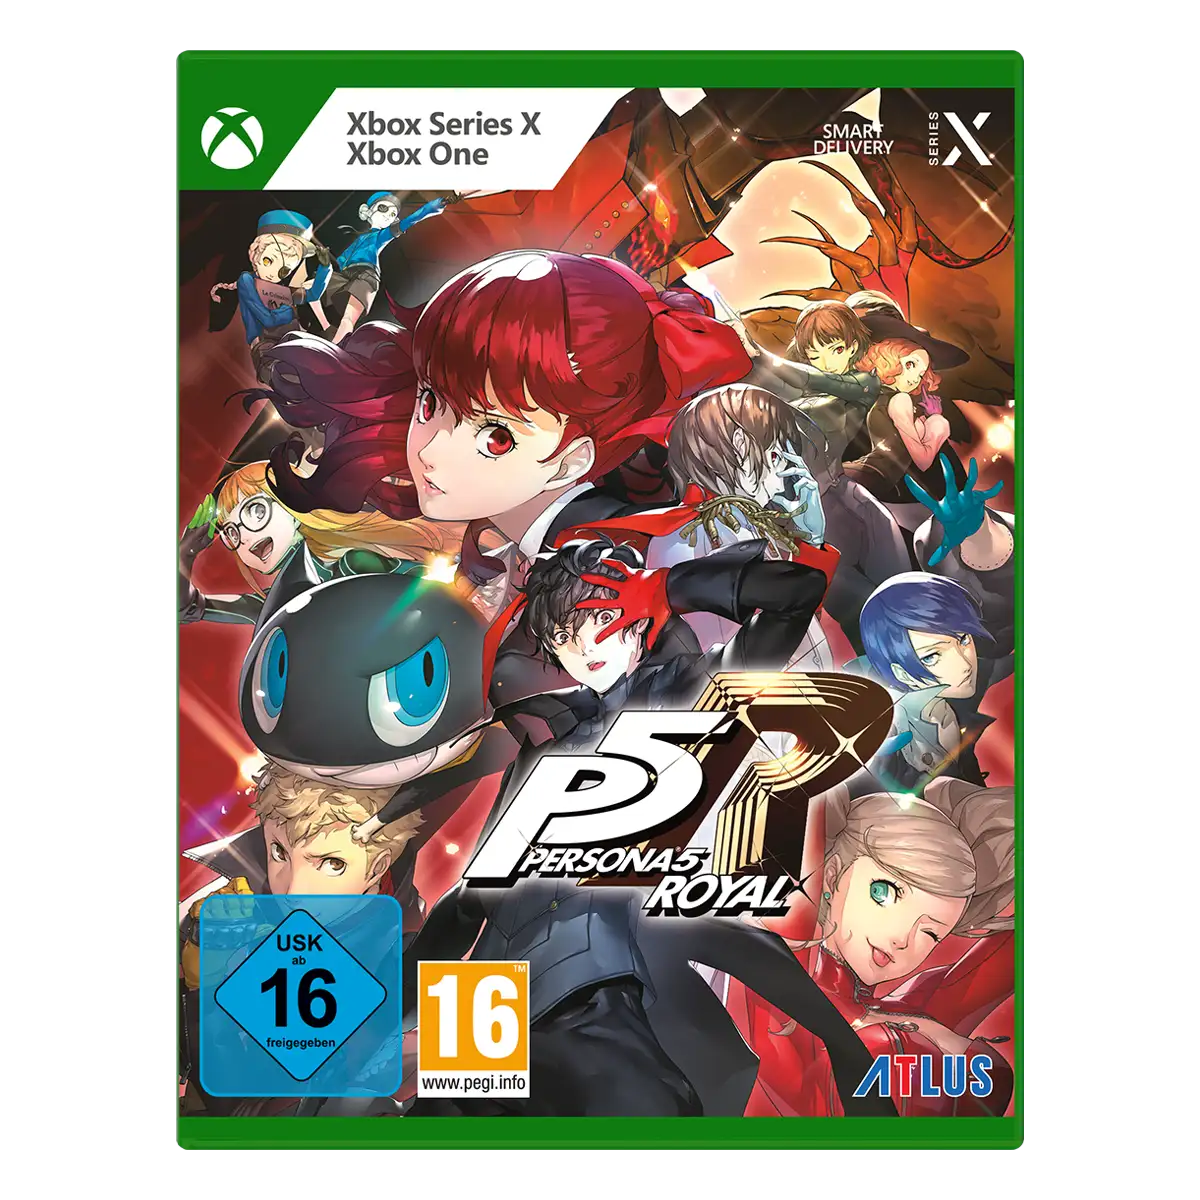 Persona 5 Royal (Xbox One / Xbos Series X)